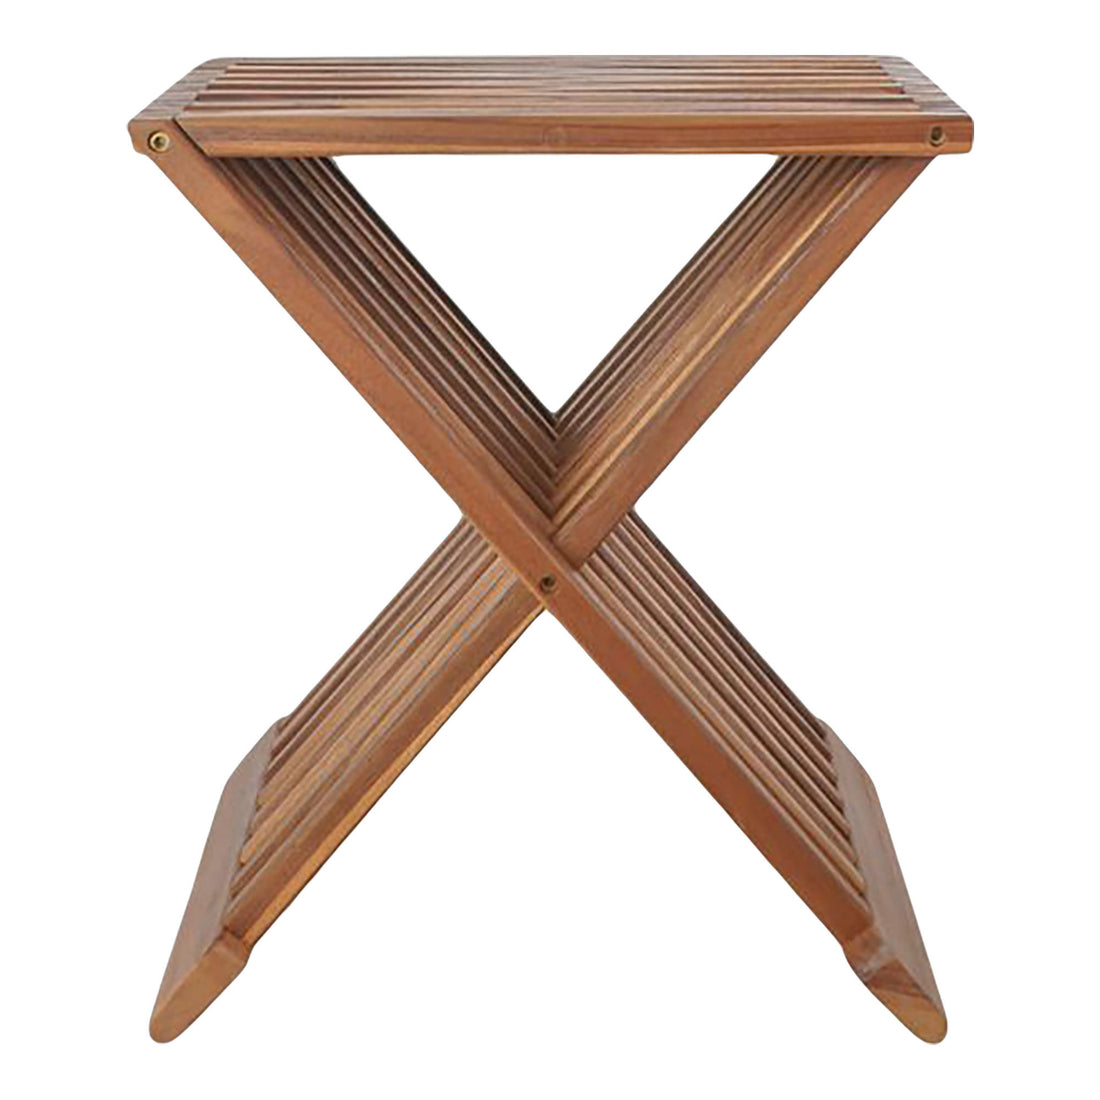 House Nordic Erto stool